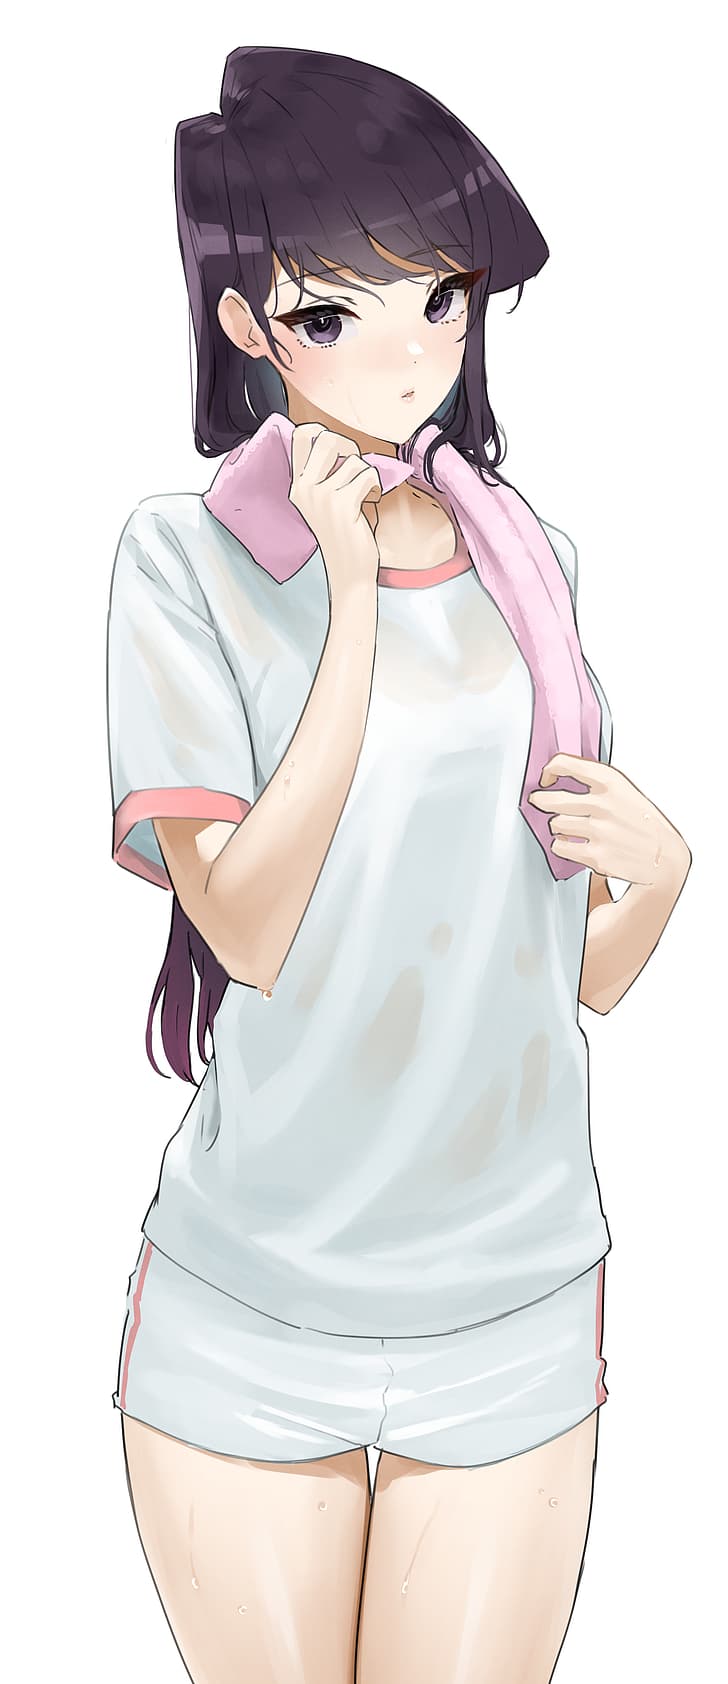 Komi-san wa, Comyushou desu., blushing, white clothing, rubbing with towel, HD wallpaper